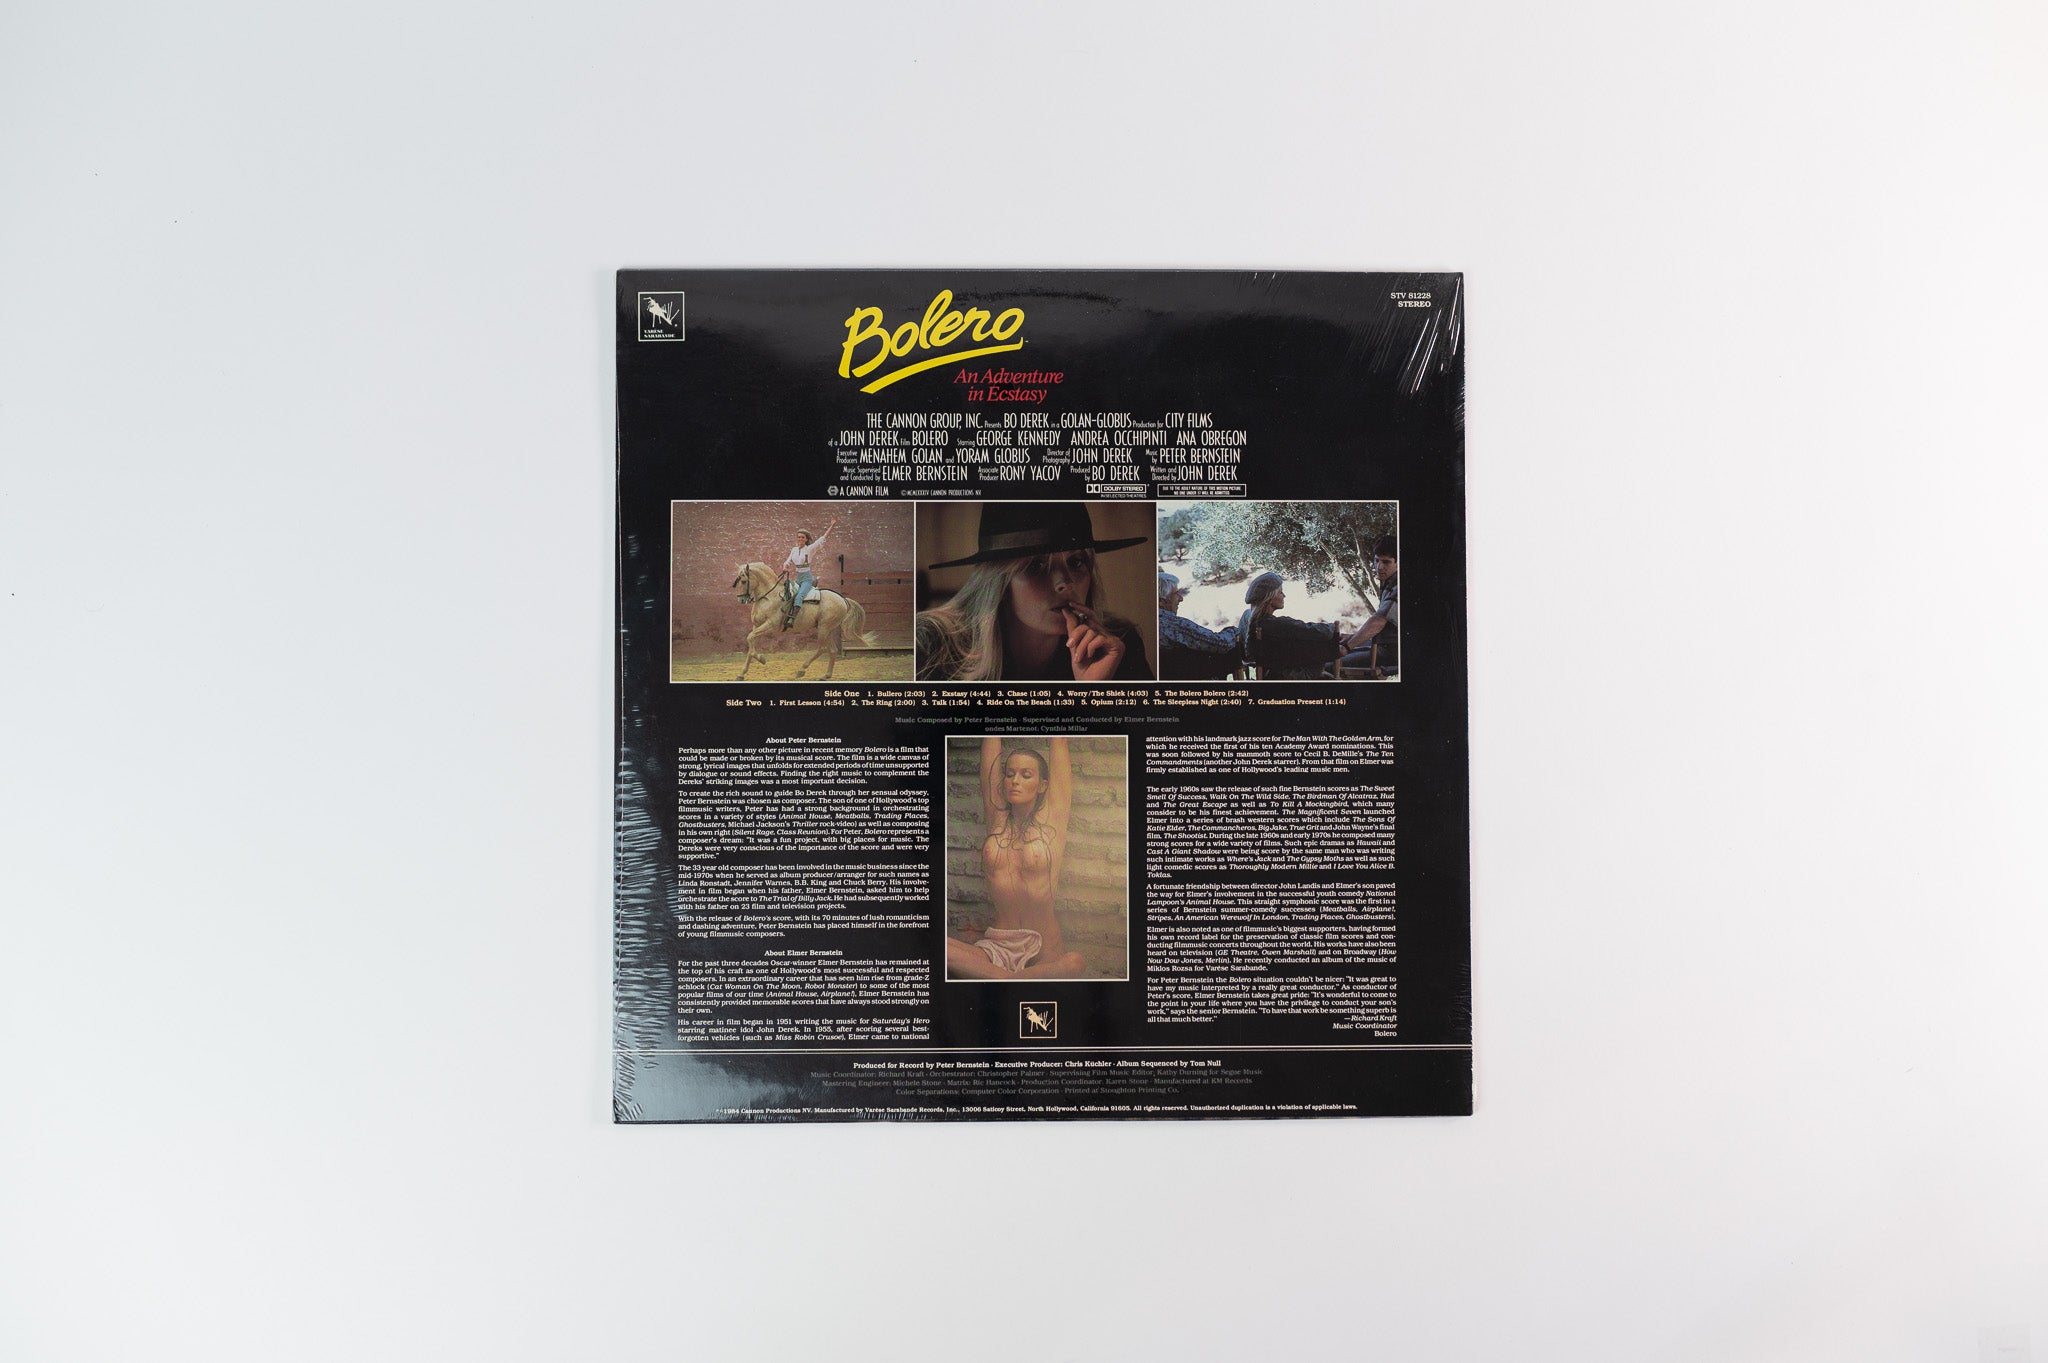 Peter Bernstein - Bolero (Original Soundtrack) on Varese Sarabande Sealed